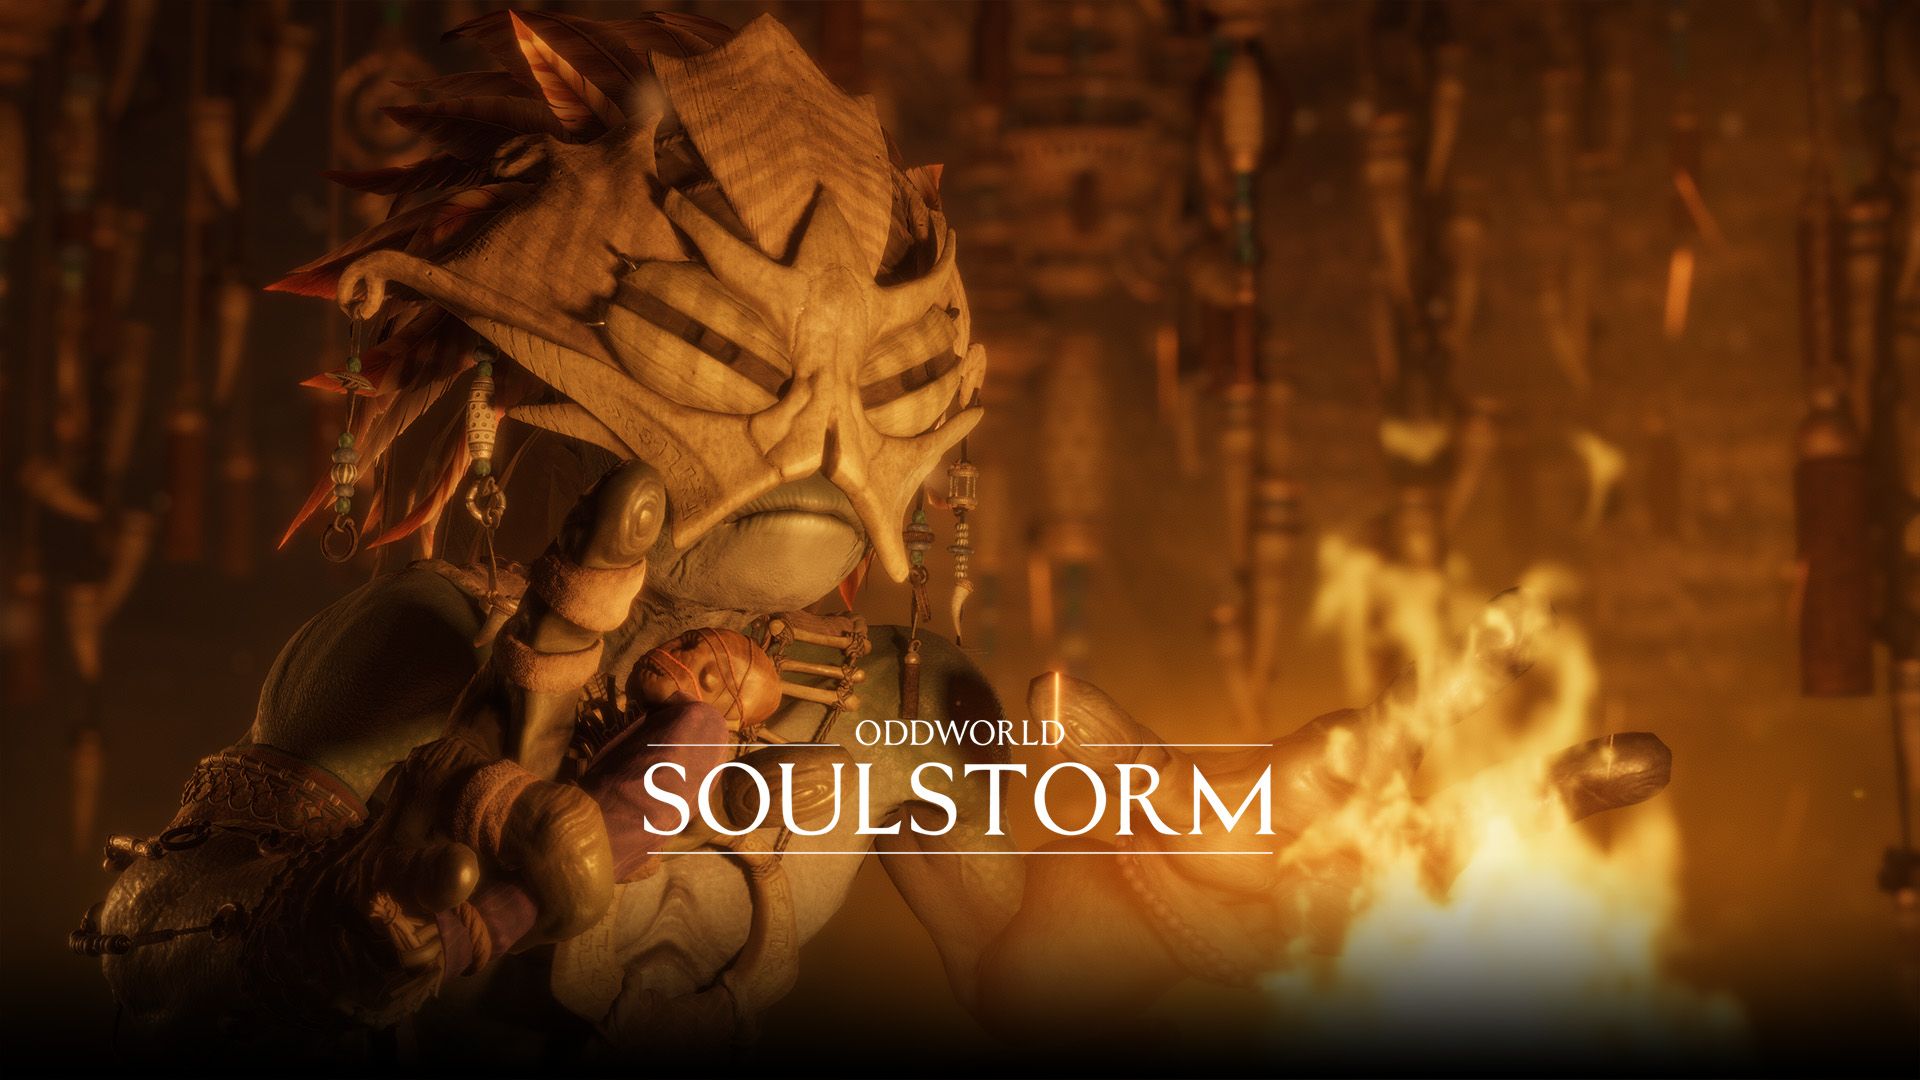 Oddworld Soulstorm Announced